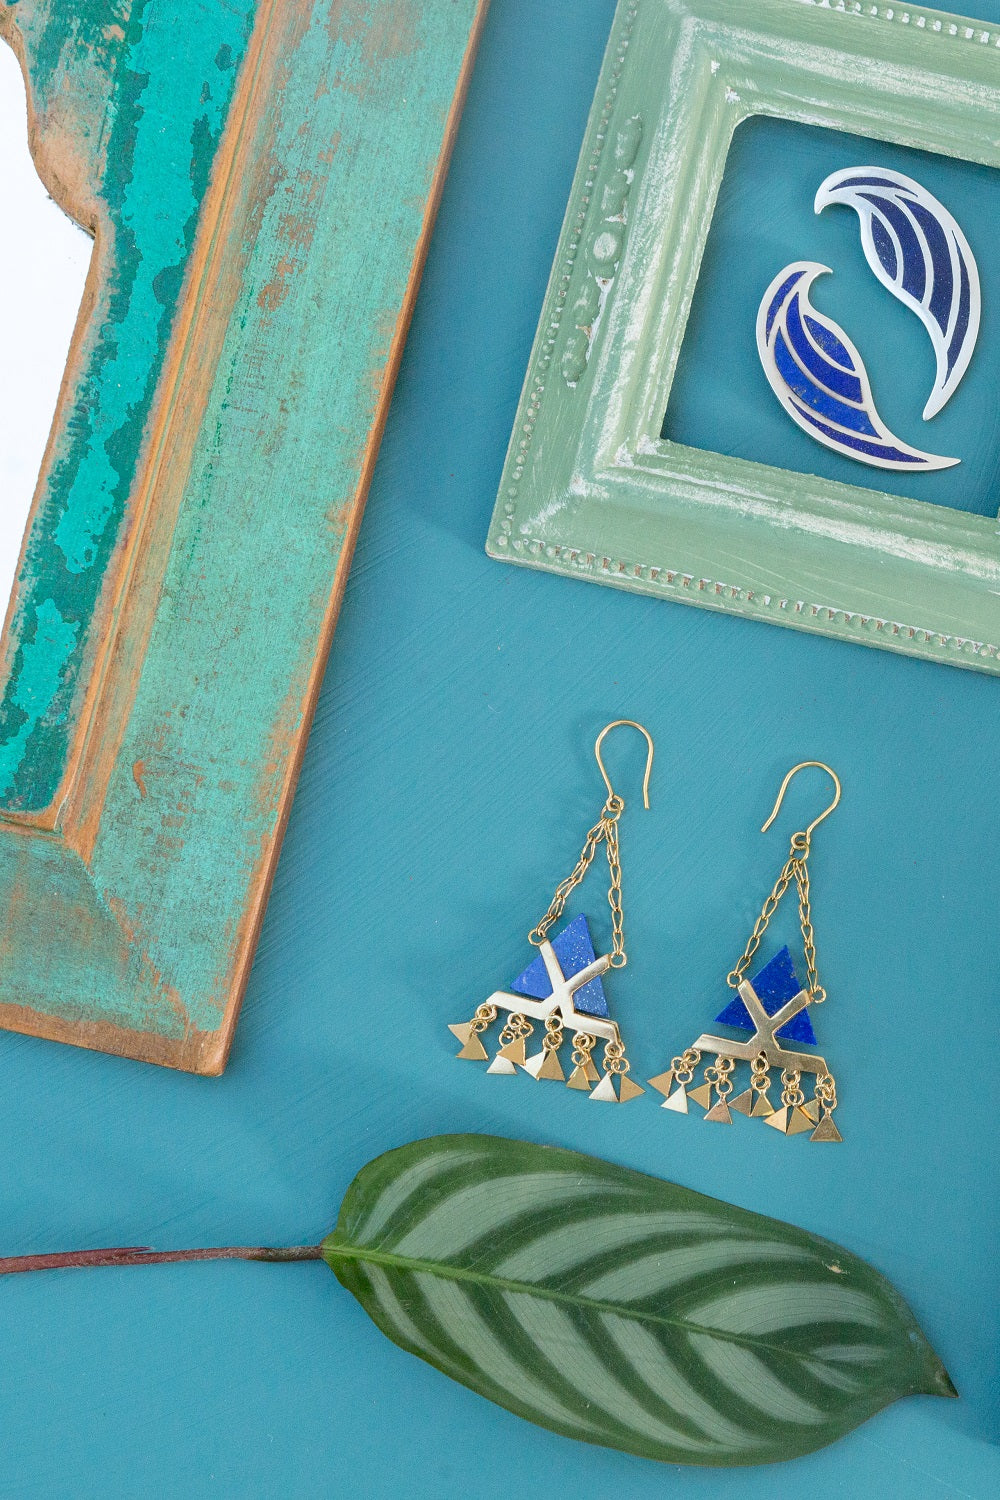 Artisan & Fox - Jewellery - Mountain Earrings in Lapis Lazuli - Handcrafted in Afghanistan